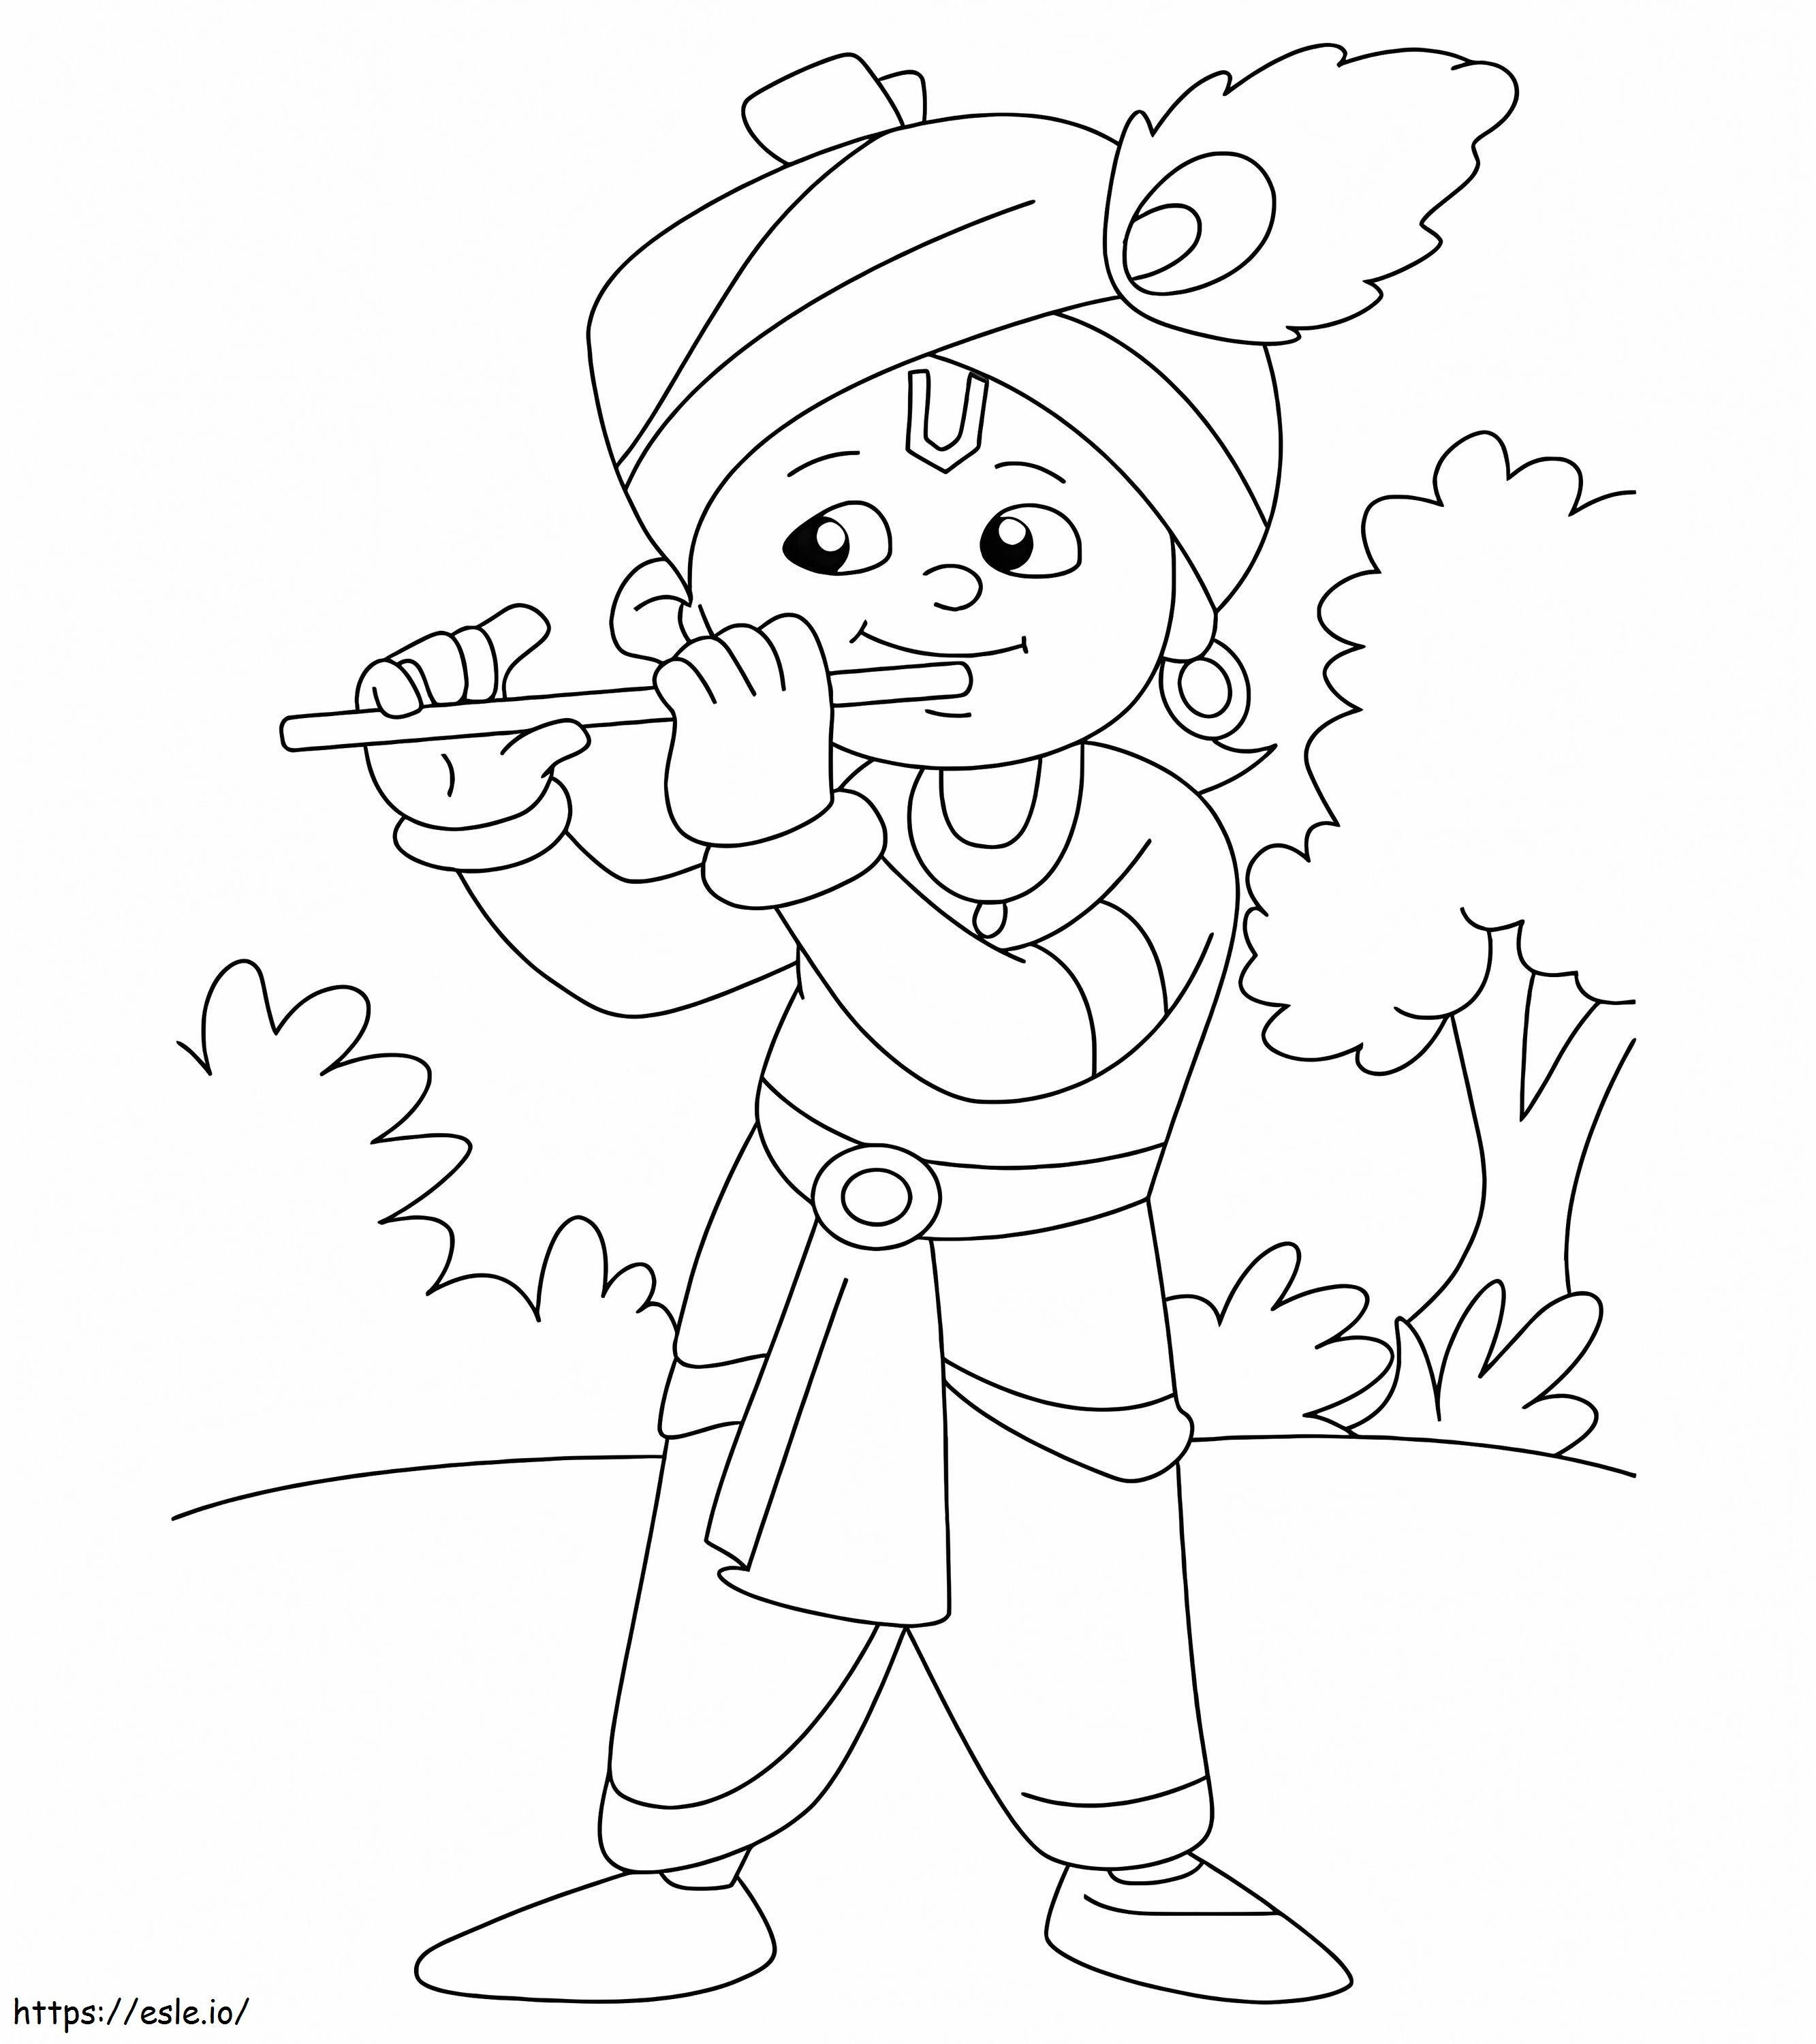 Menino de desenho animado tocando flauta para colorir